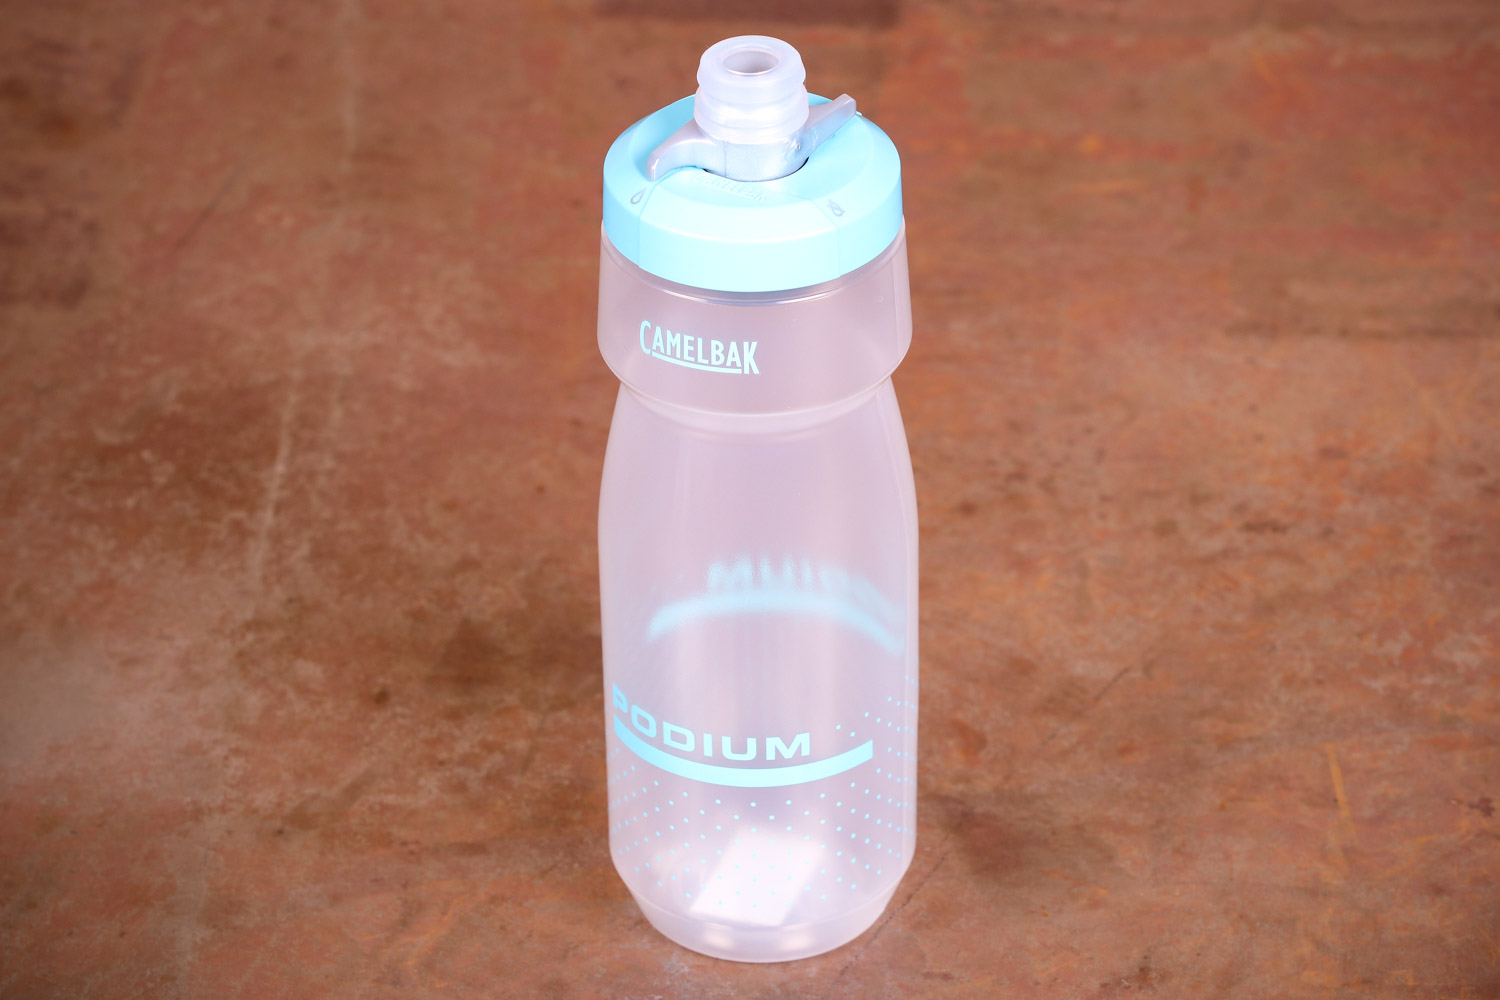 camelbak water bottle cage